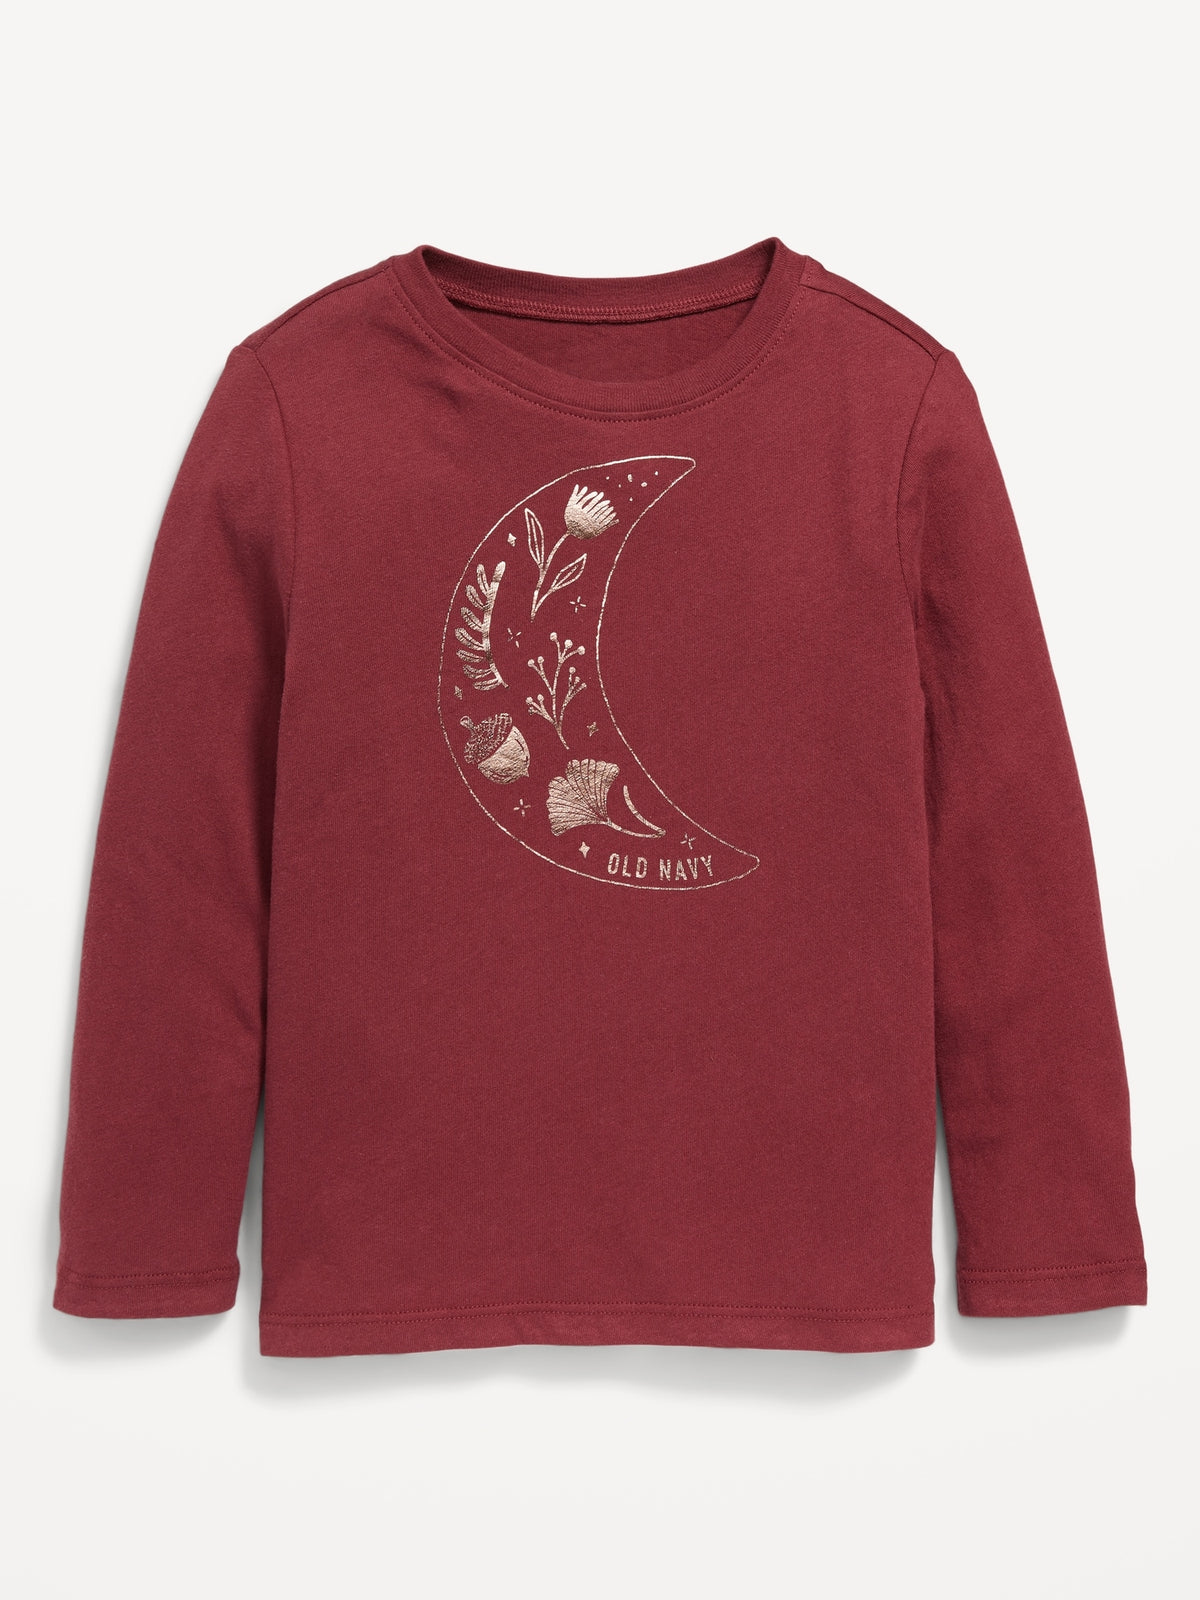 Unisex Long-Sleeve Logo-Graphic T-Shirt for Toddler